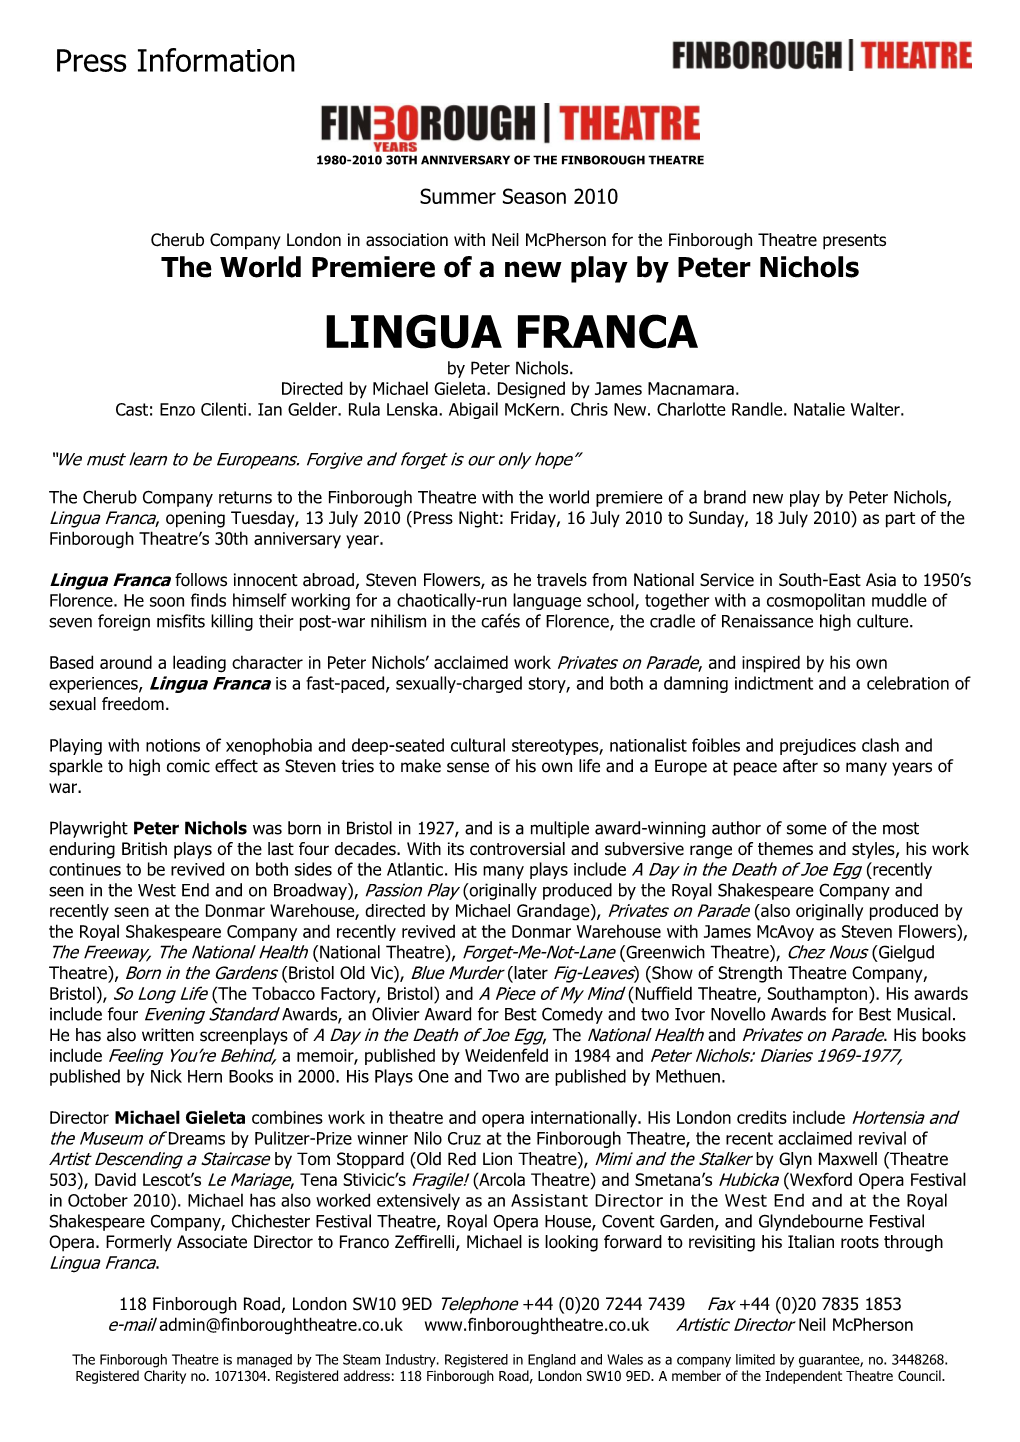 LINGUA FRANCA by Peter Nichols